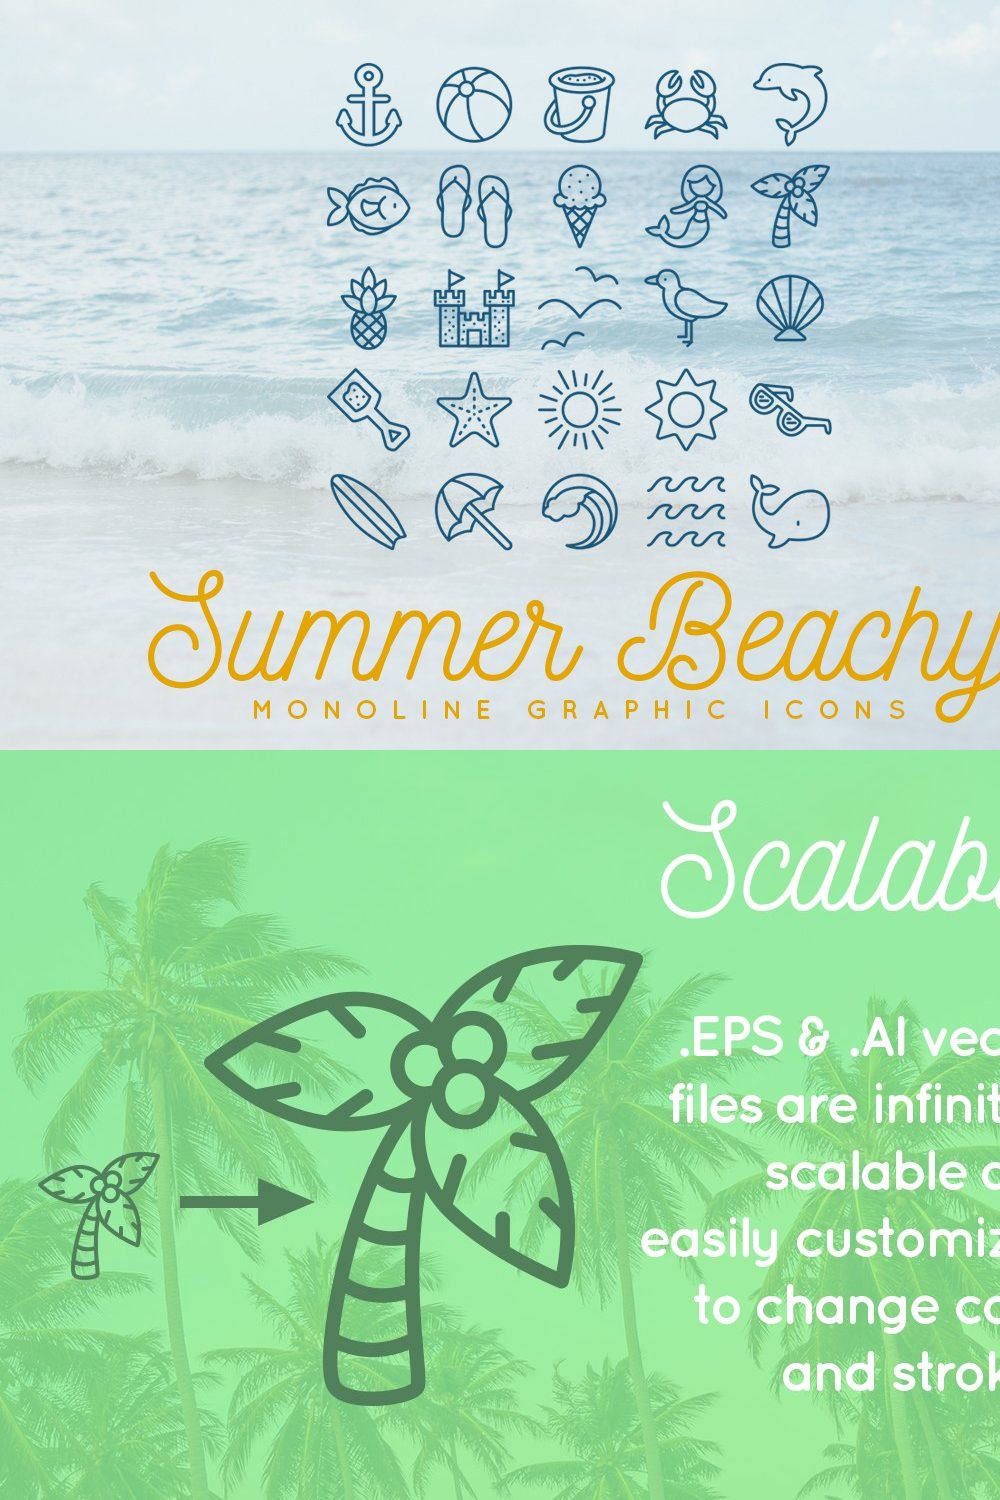 25 Summer Beach Monoline Icons pinterest preview image.